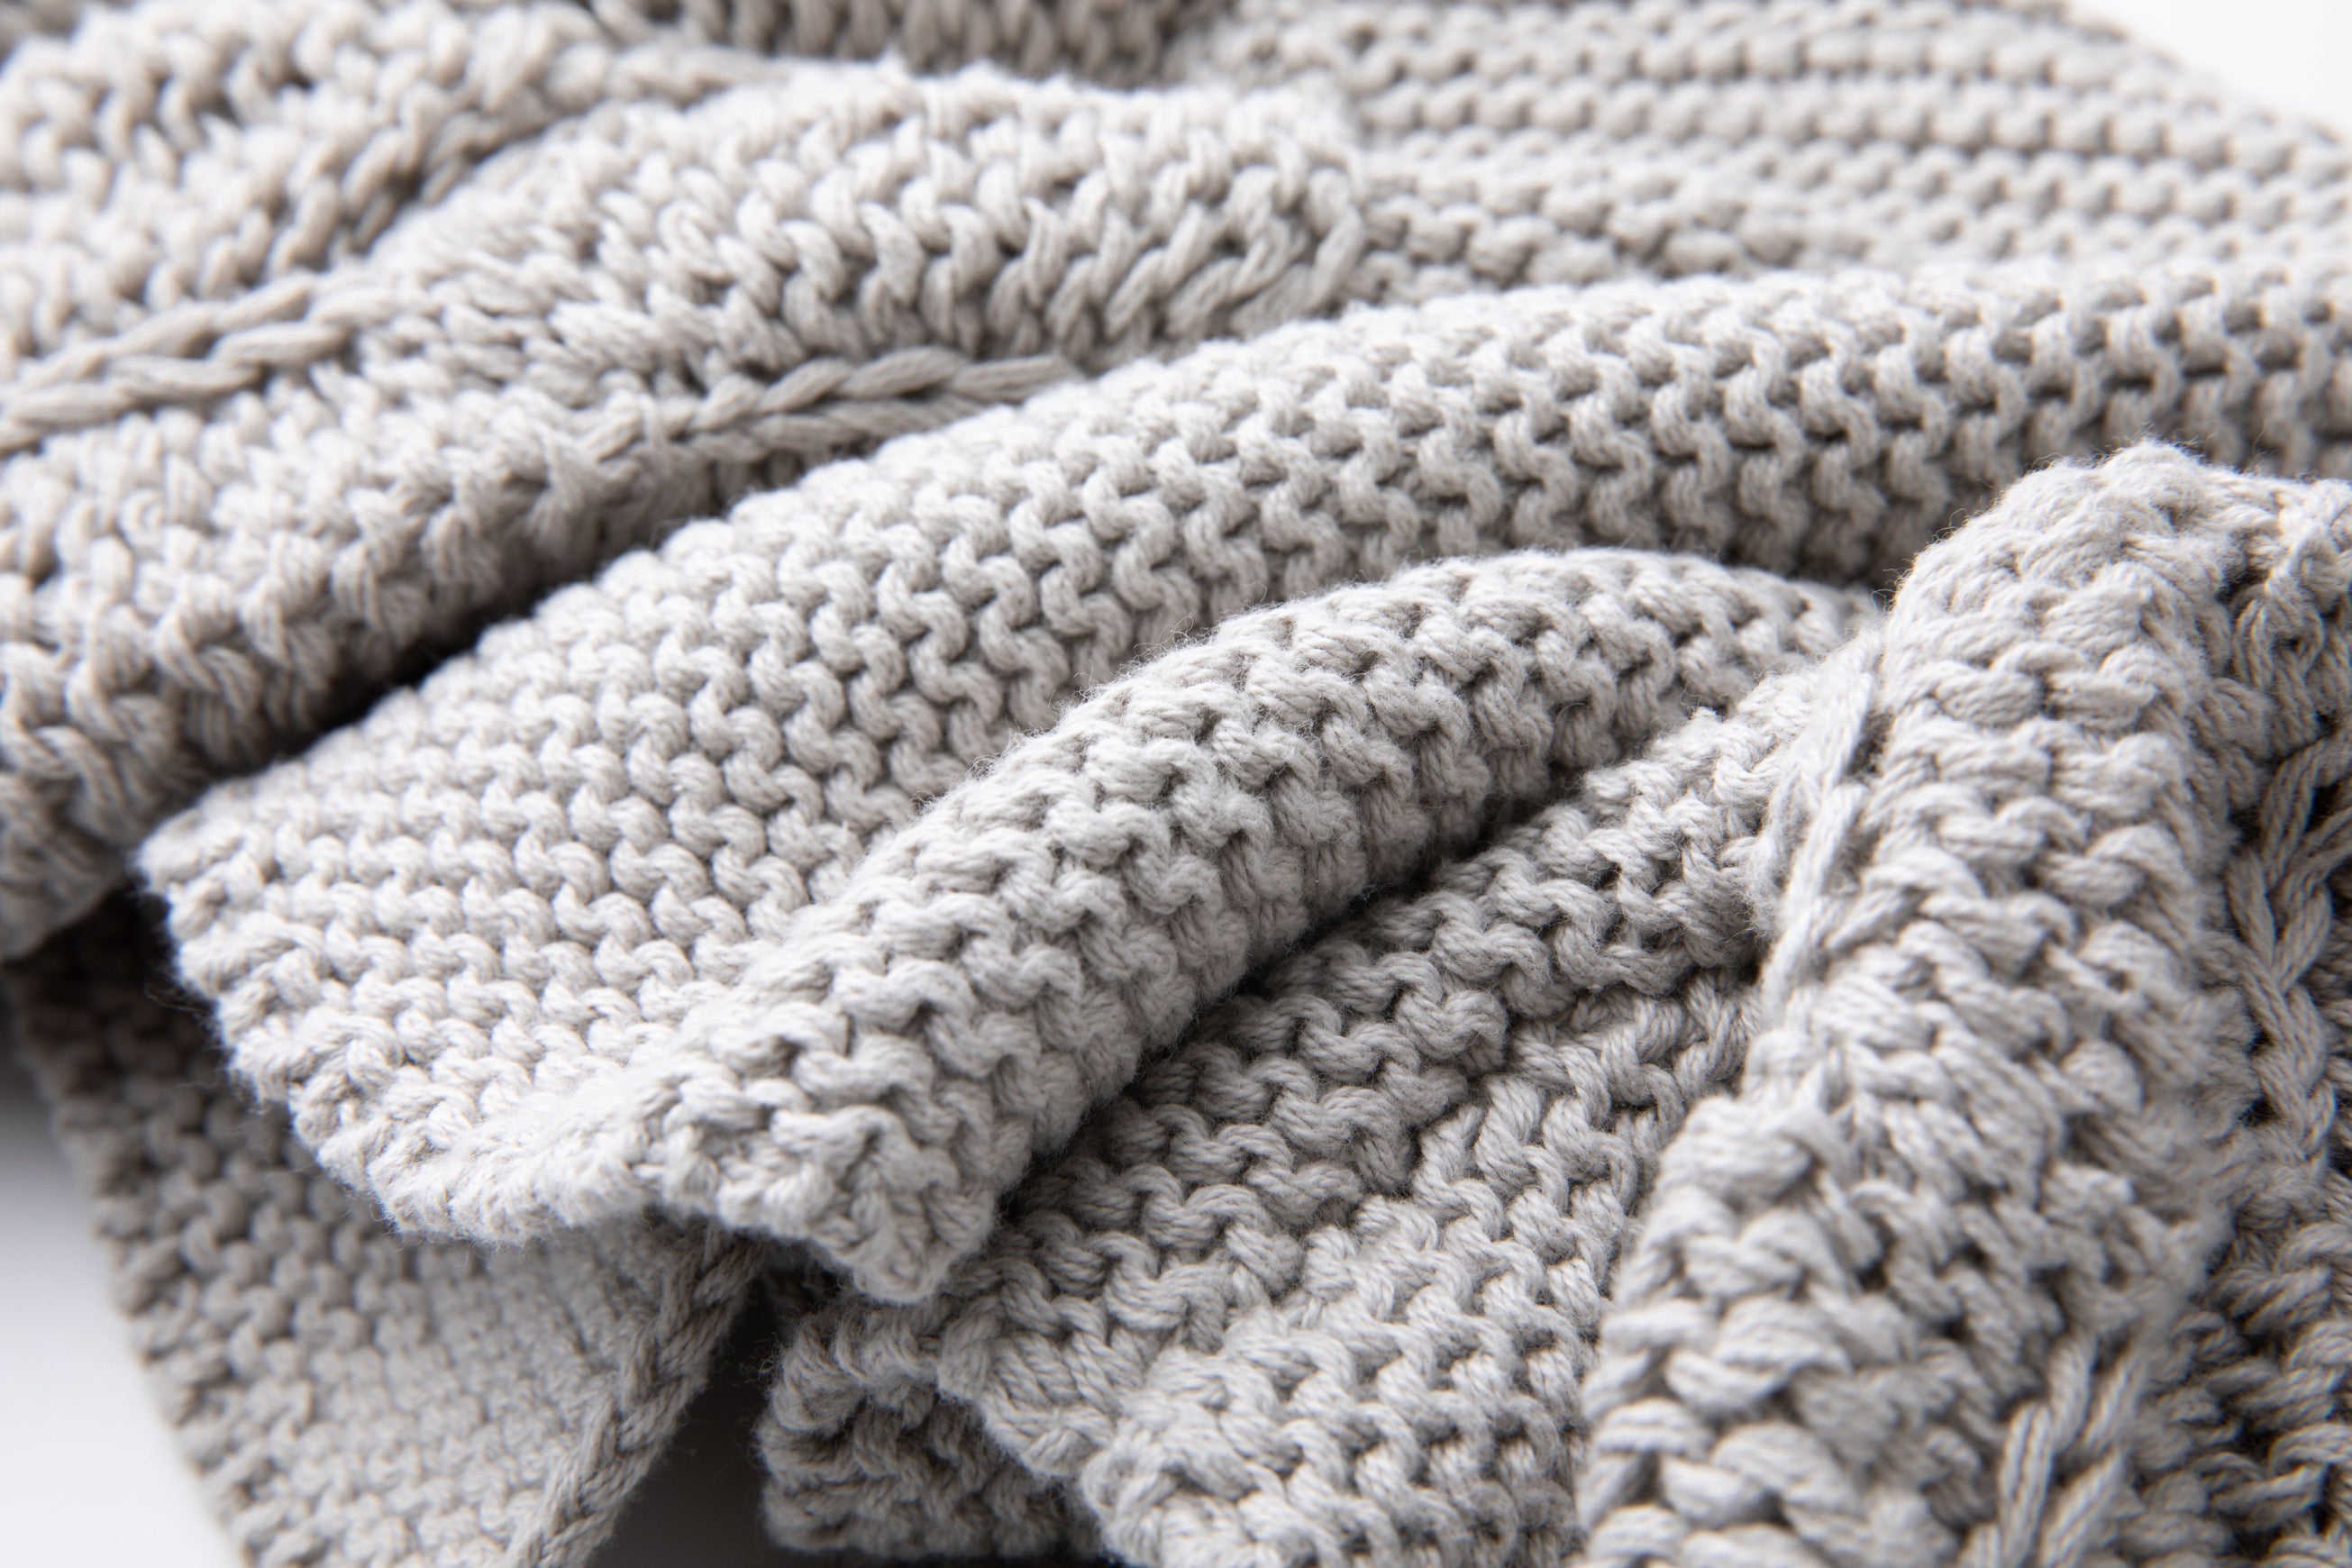 Grey knitted bolero